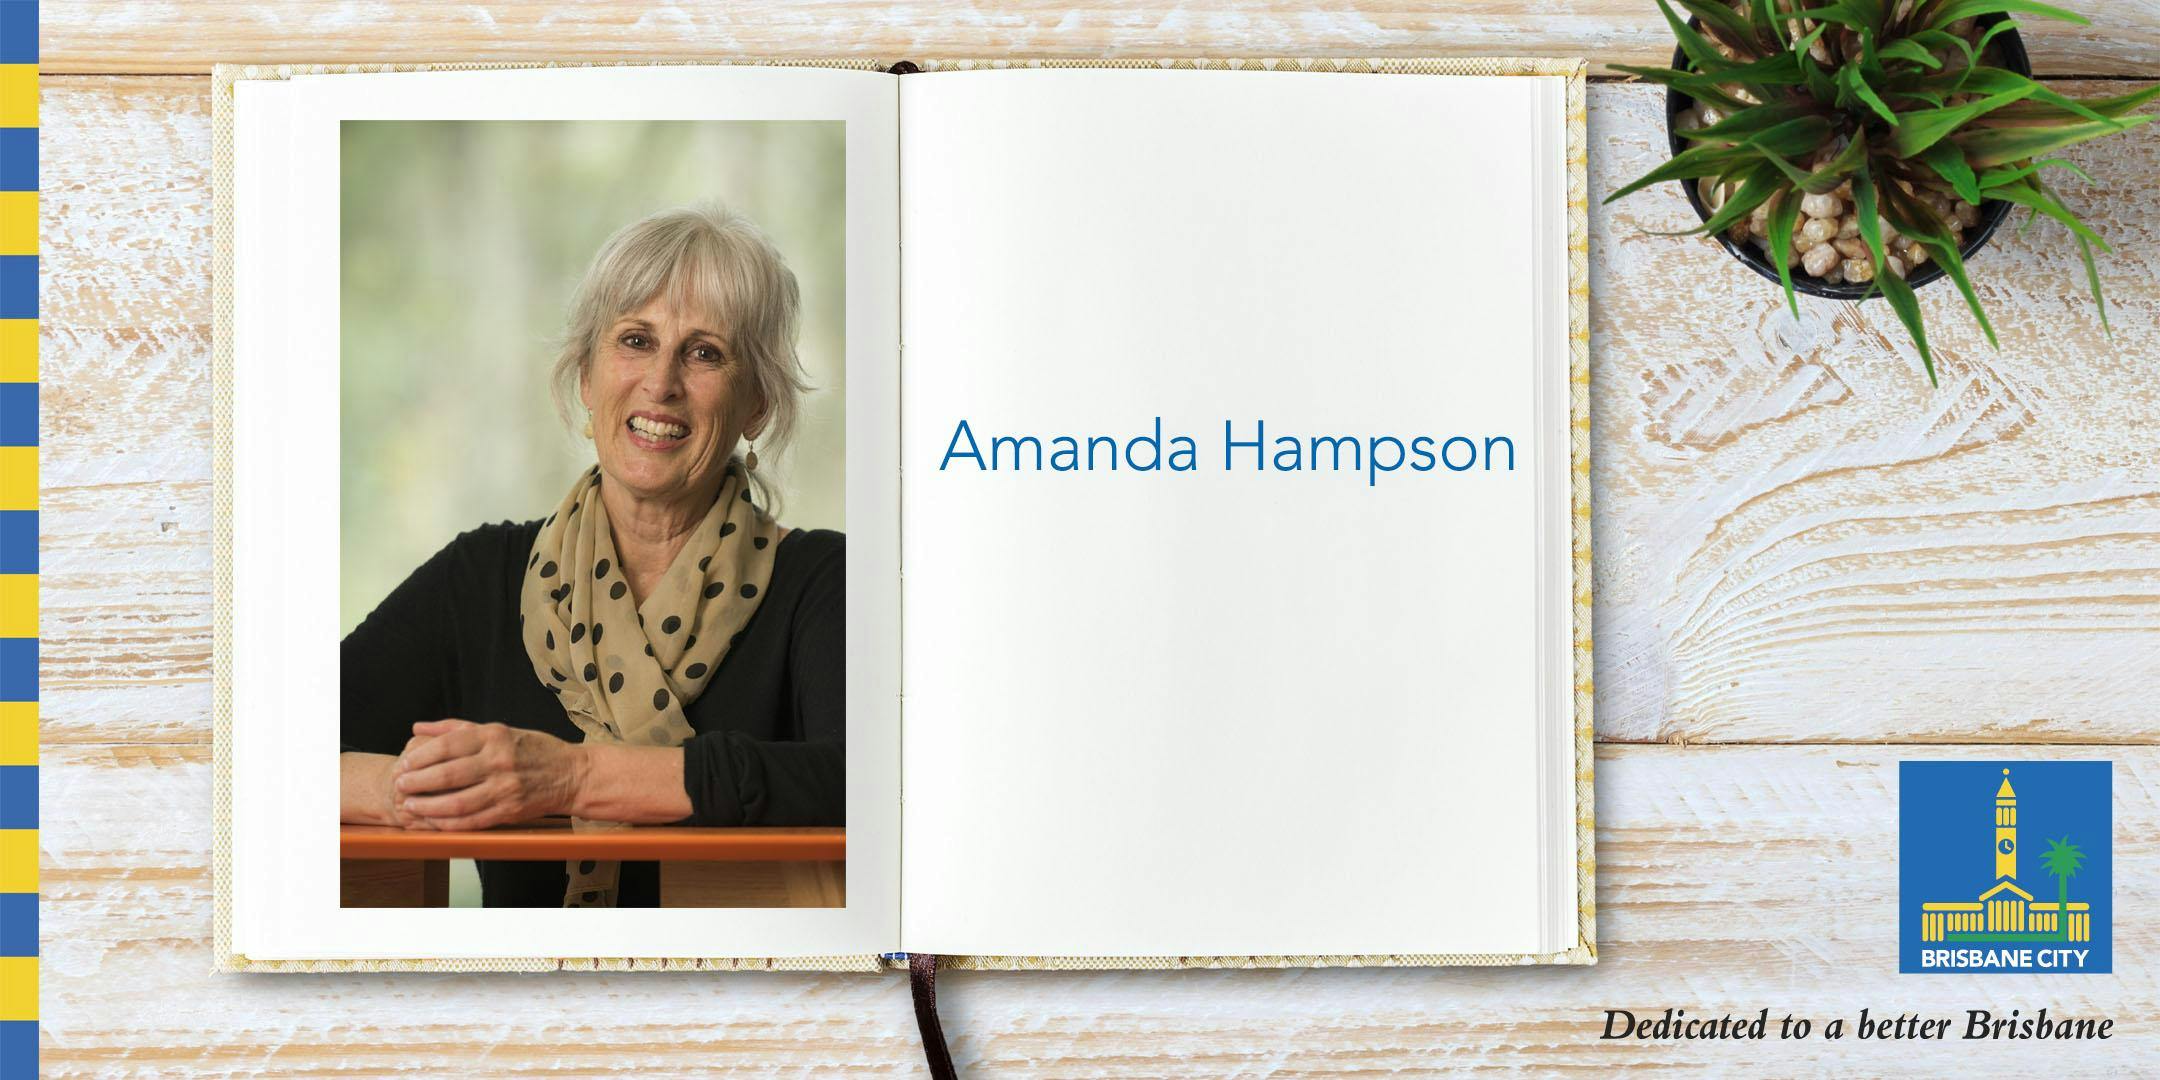 Meet Amanda Hampson - Carindale Library